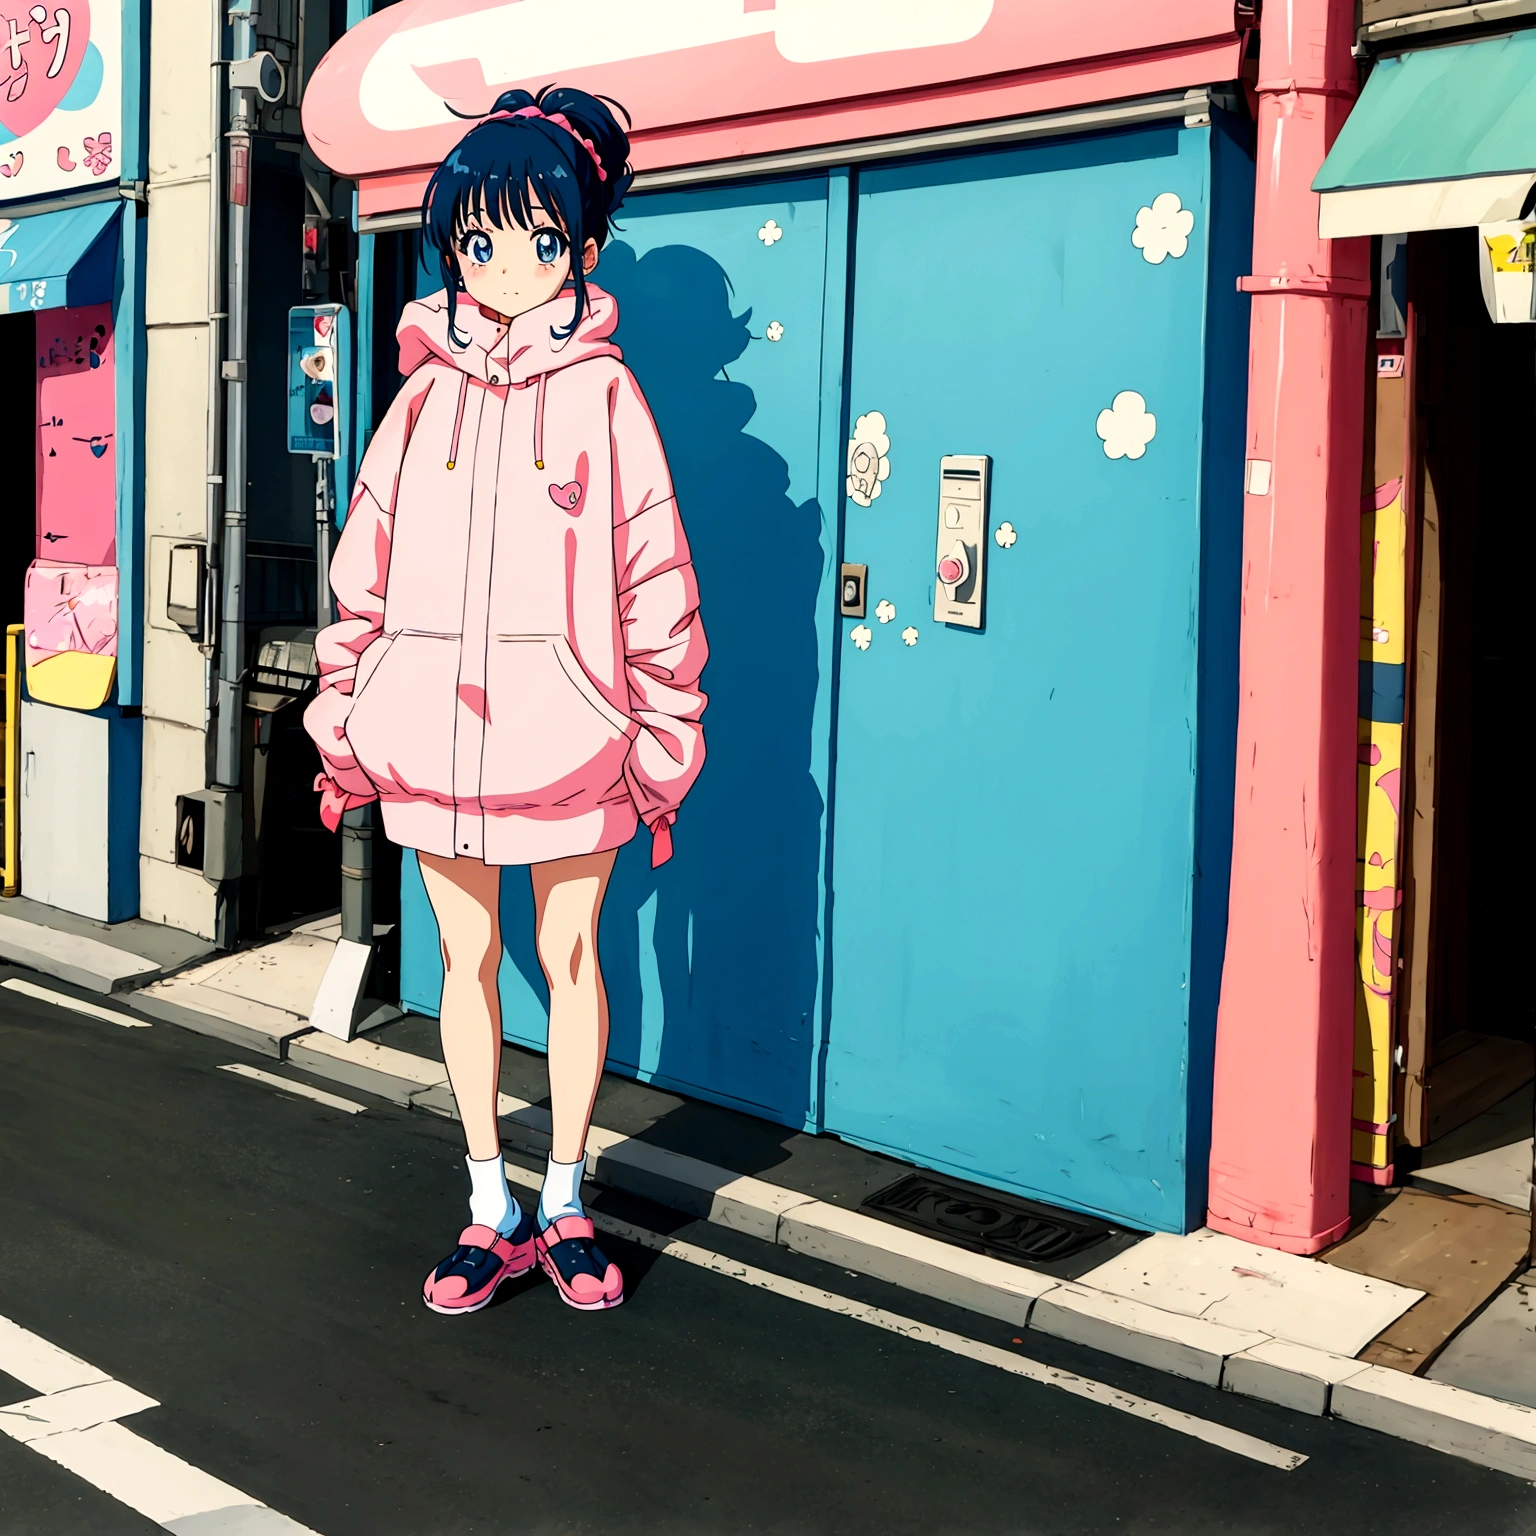 garota de anime kawaii parada na rua em anime kawaii